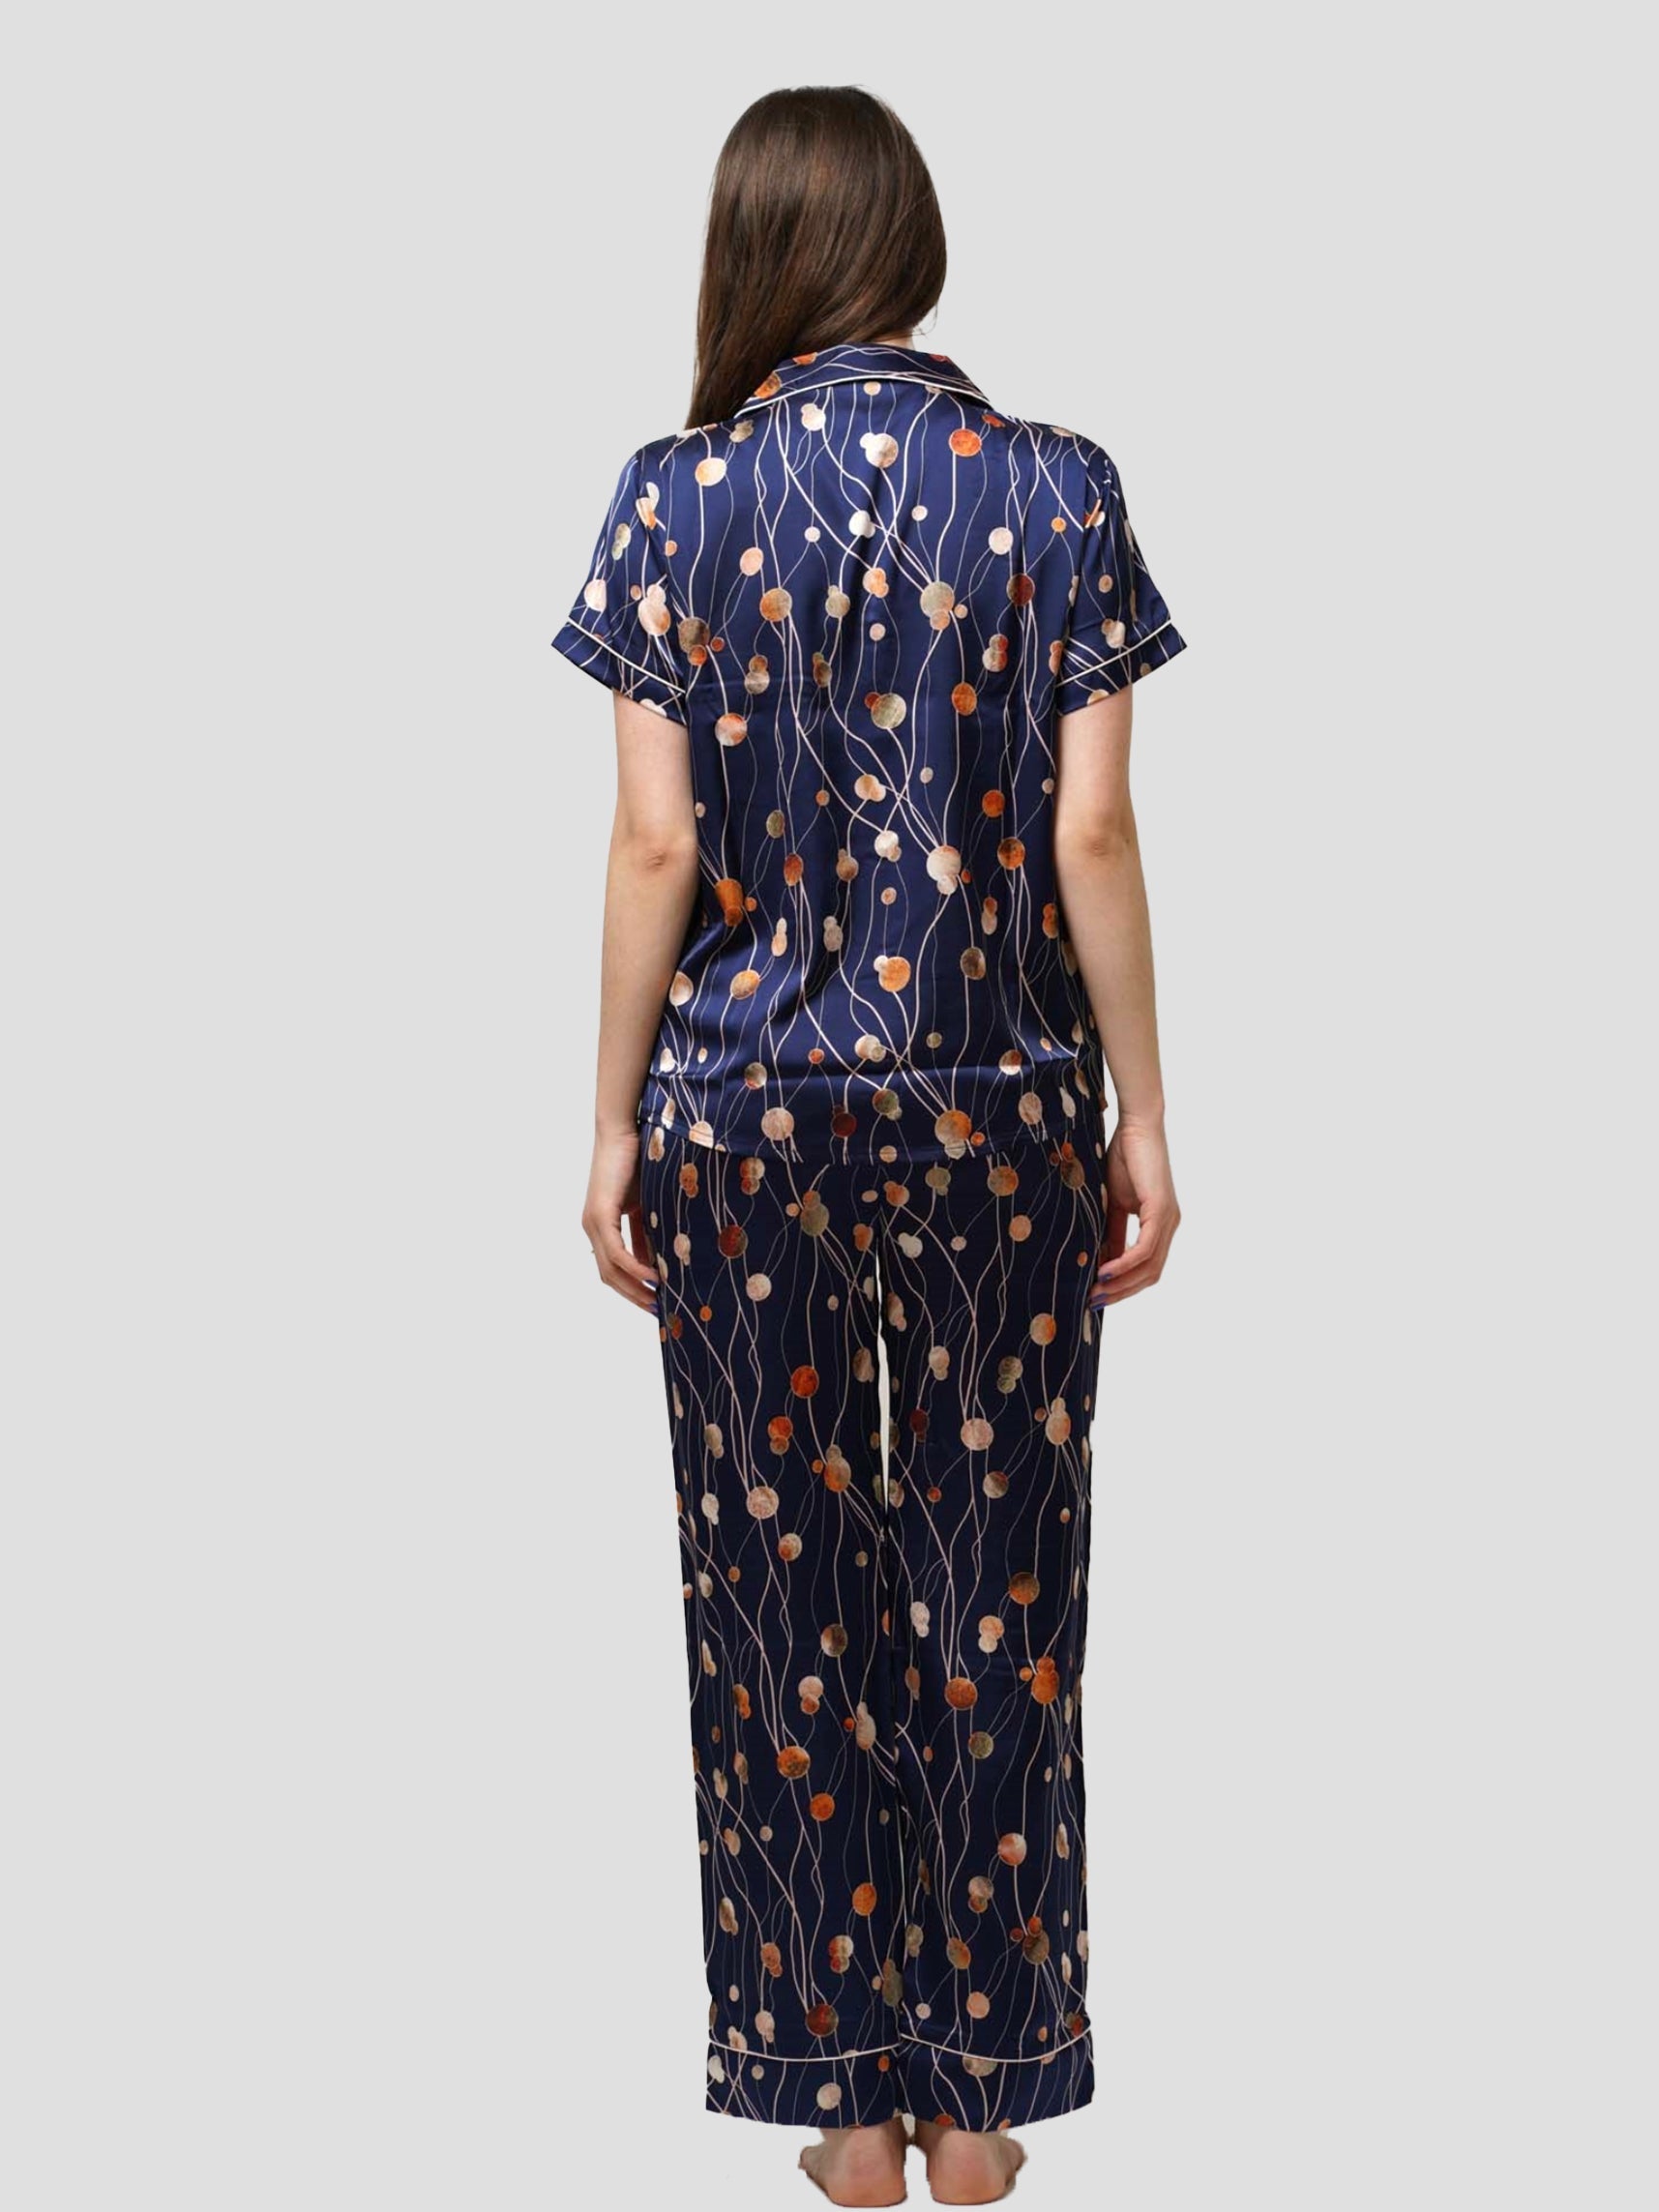 Navy abstract printed Notch collar sleepwear set in Satin fabric - inteblu